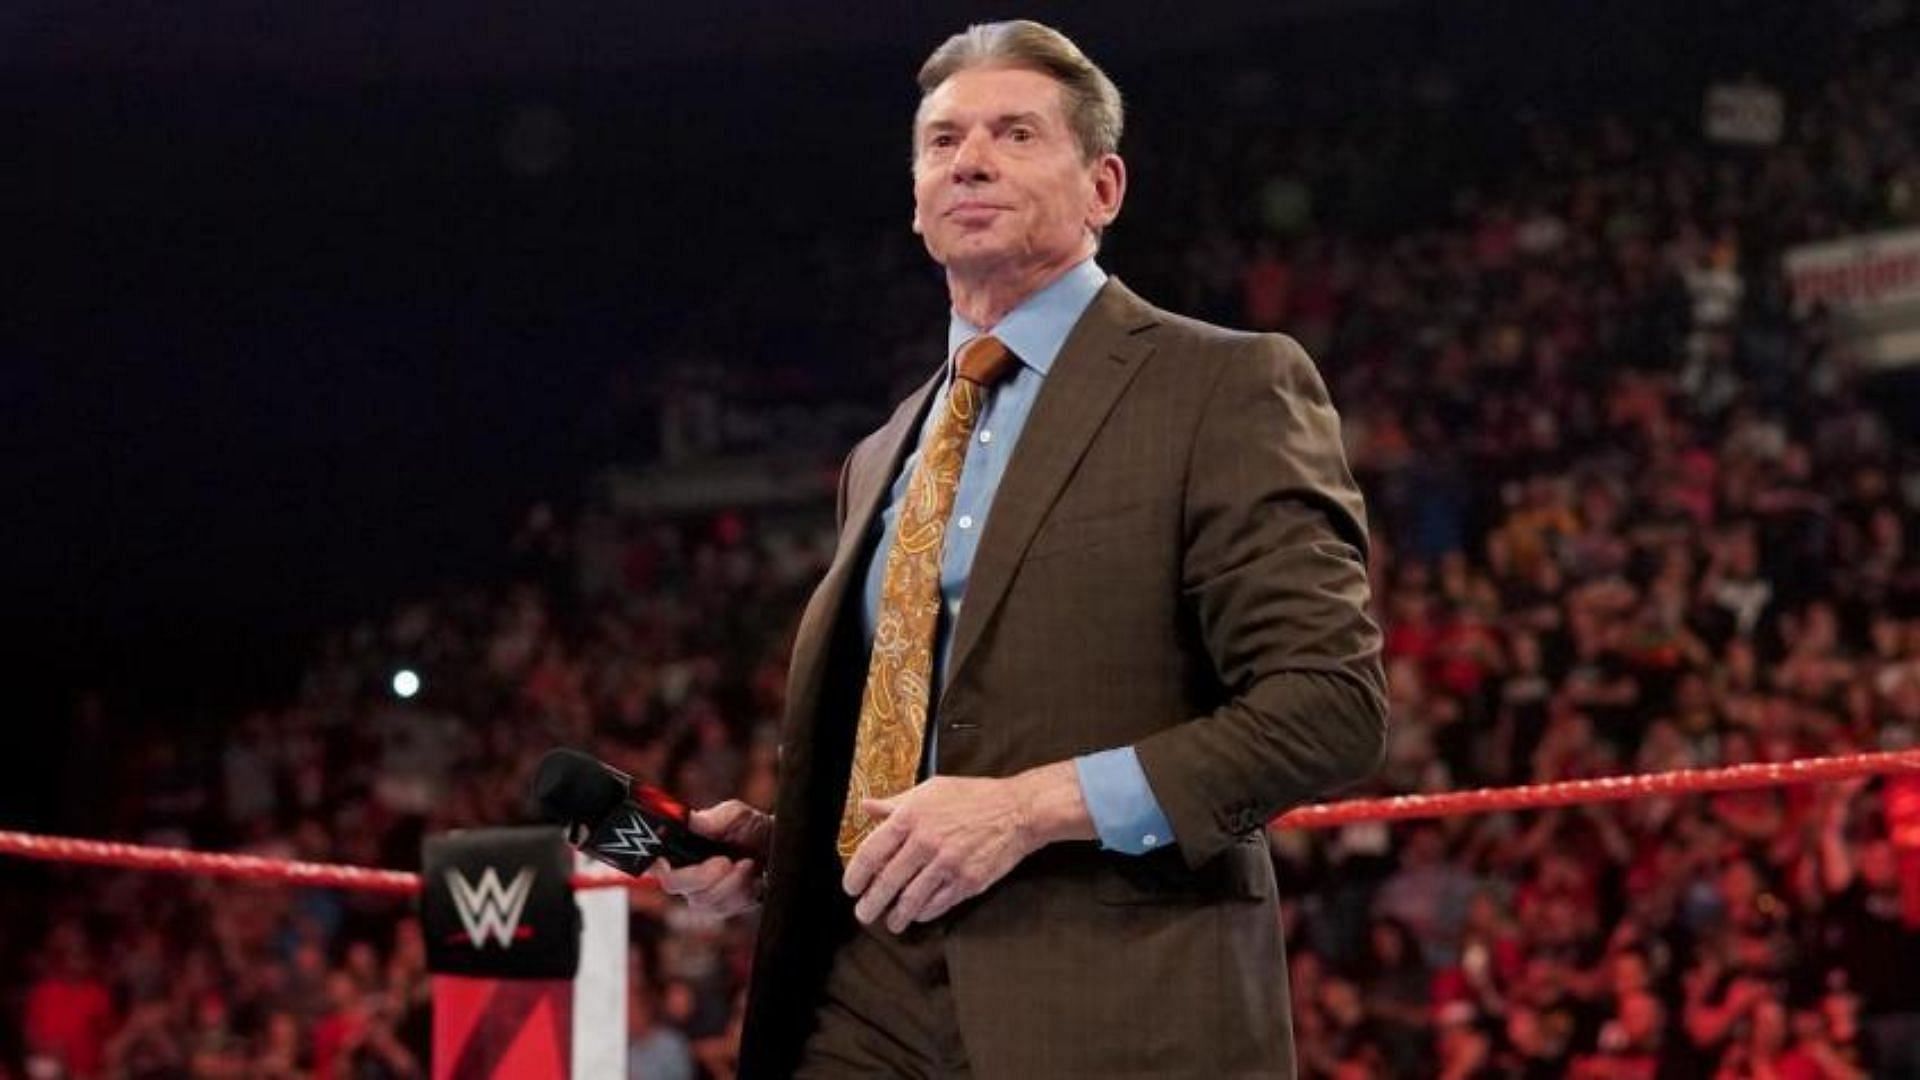 Former WWE Chairman, Vince McMahon, has had an eventful year